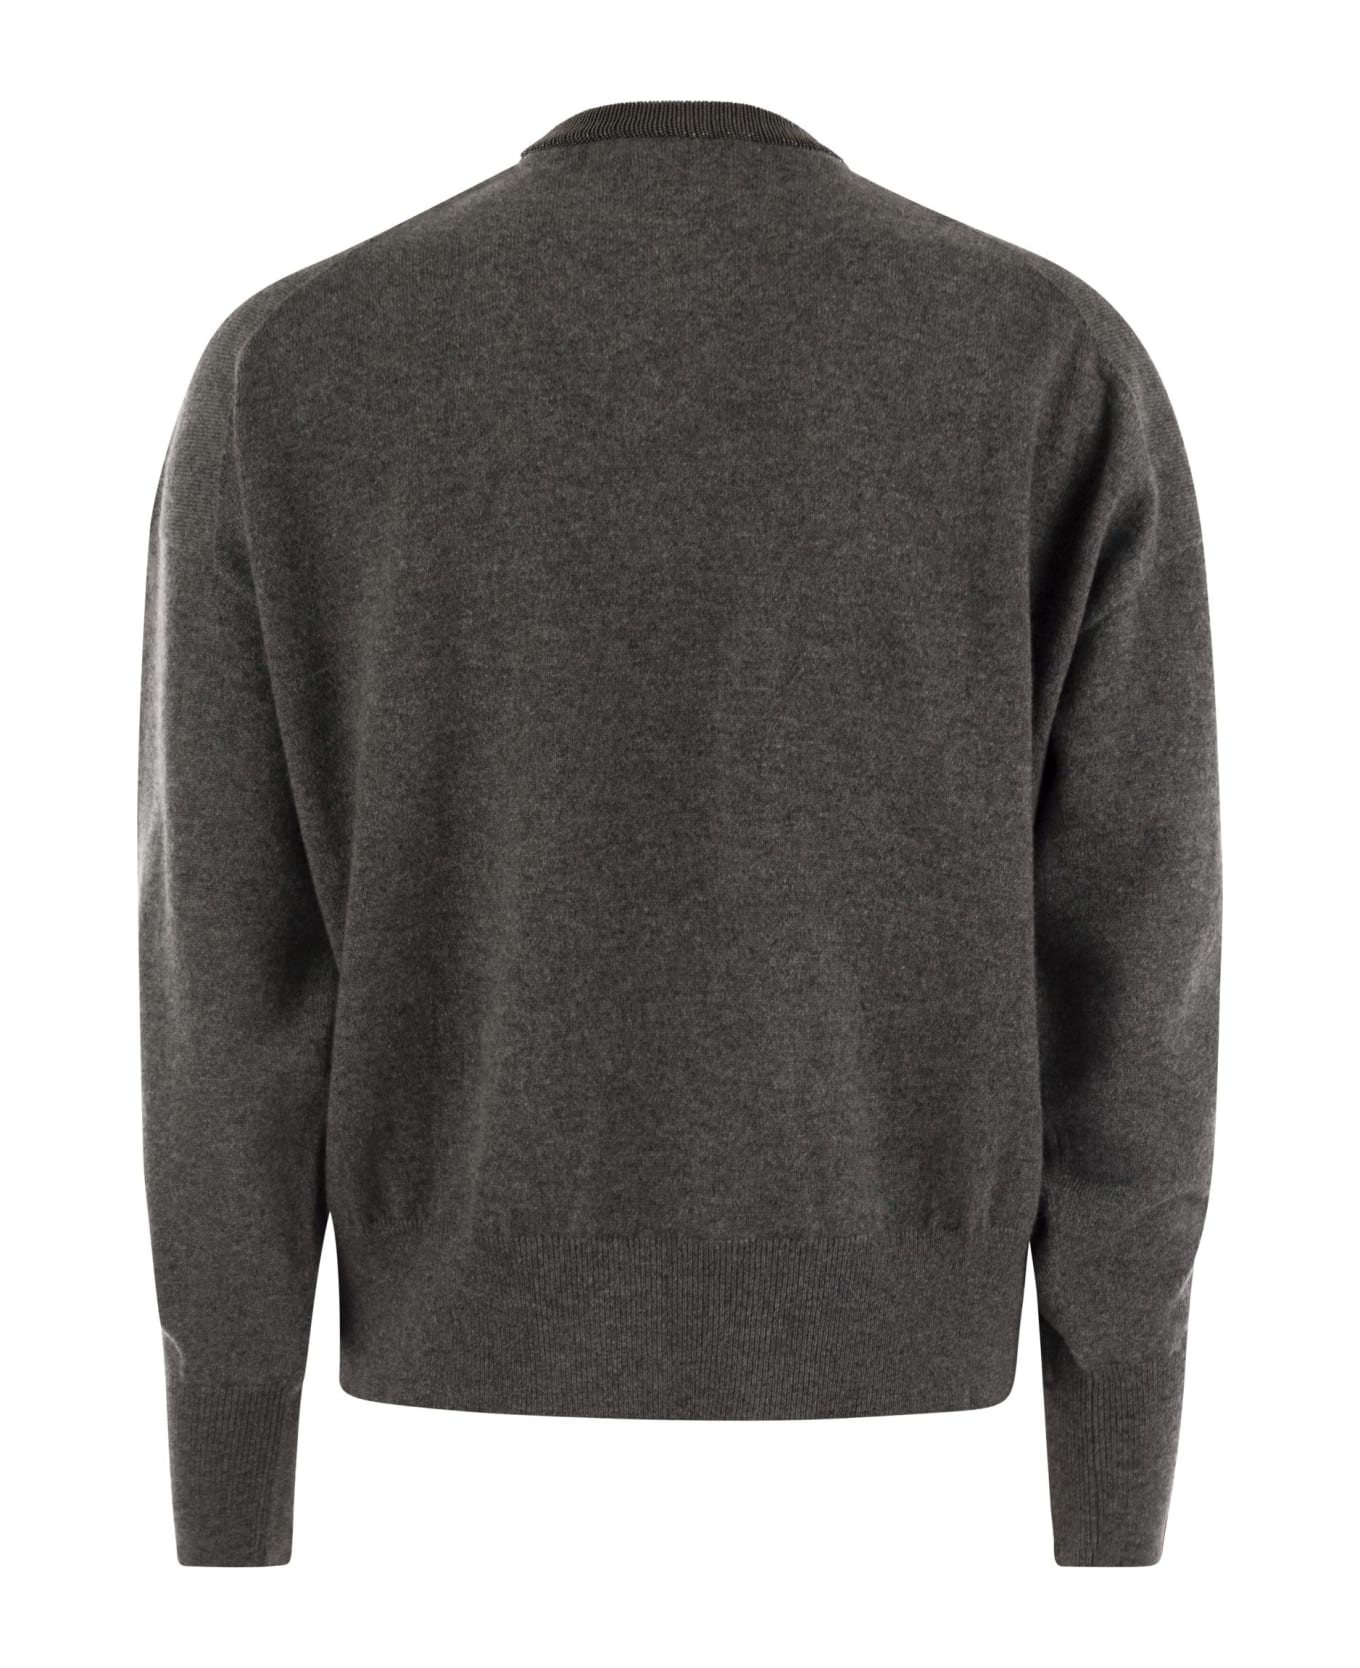 Brunello Cucinelli Cashmere Sweater With Necklace - Anthracite